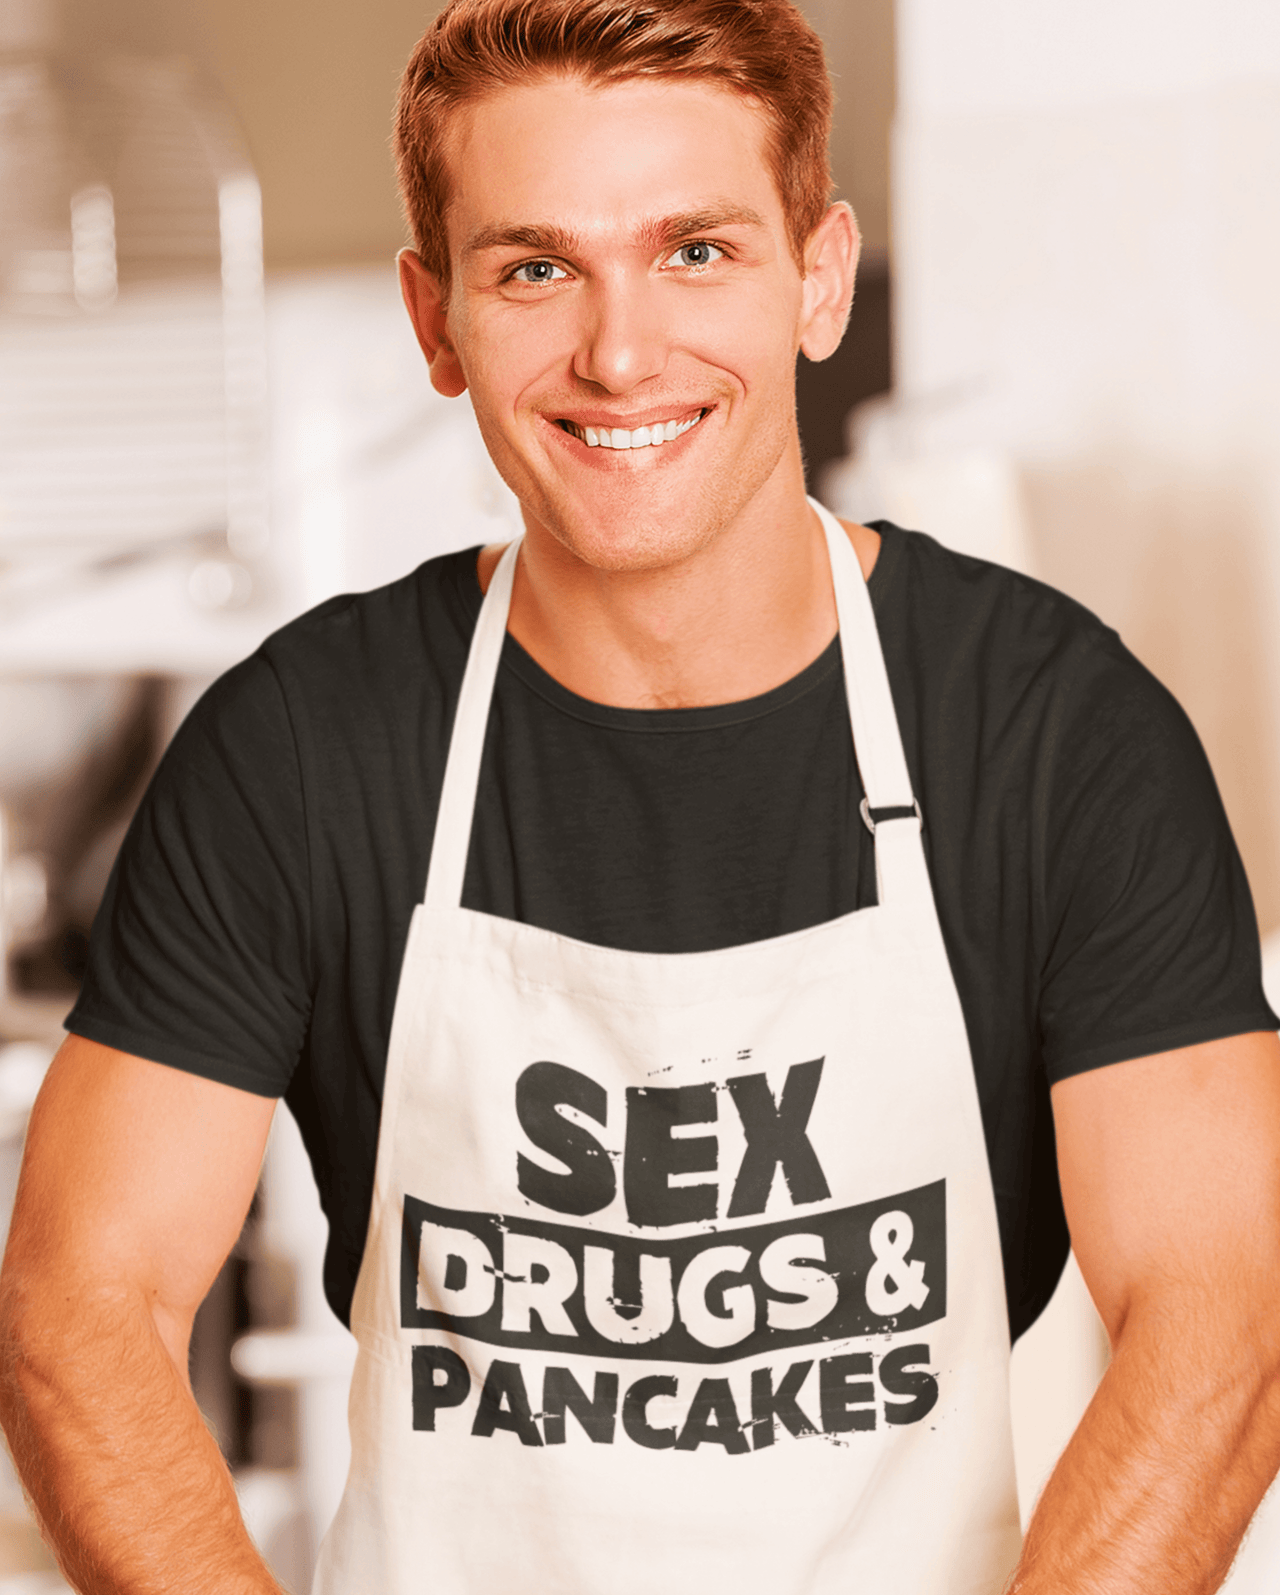 Sex Drugs and Pancakes Monochrome Pancake Day Cotton Kitchen Apron 8Ball